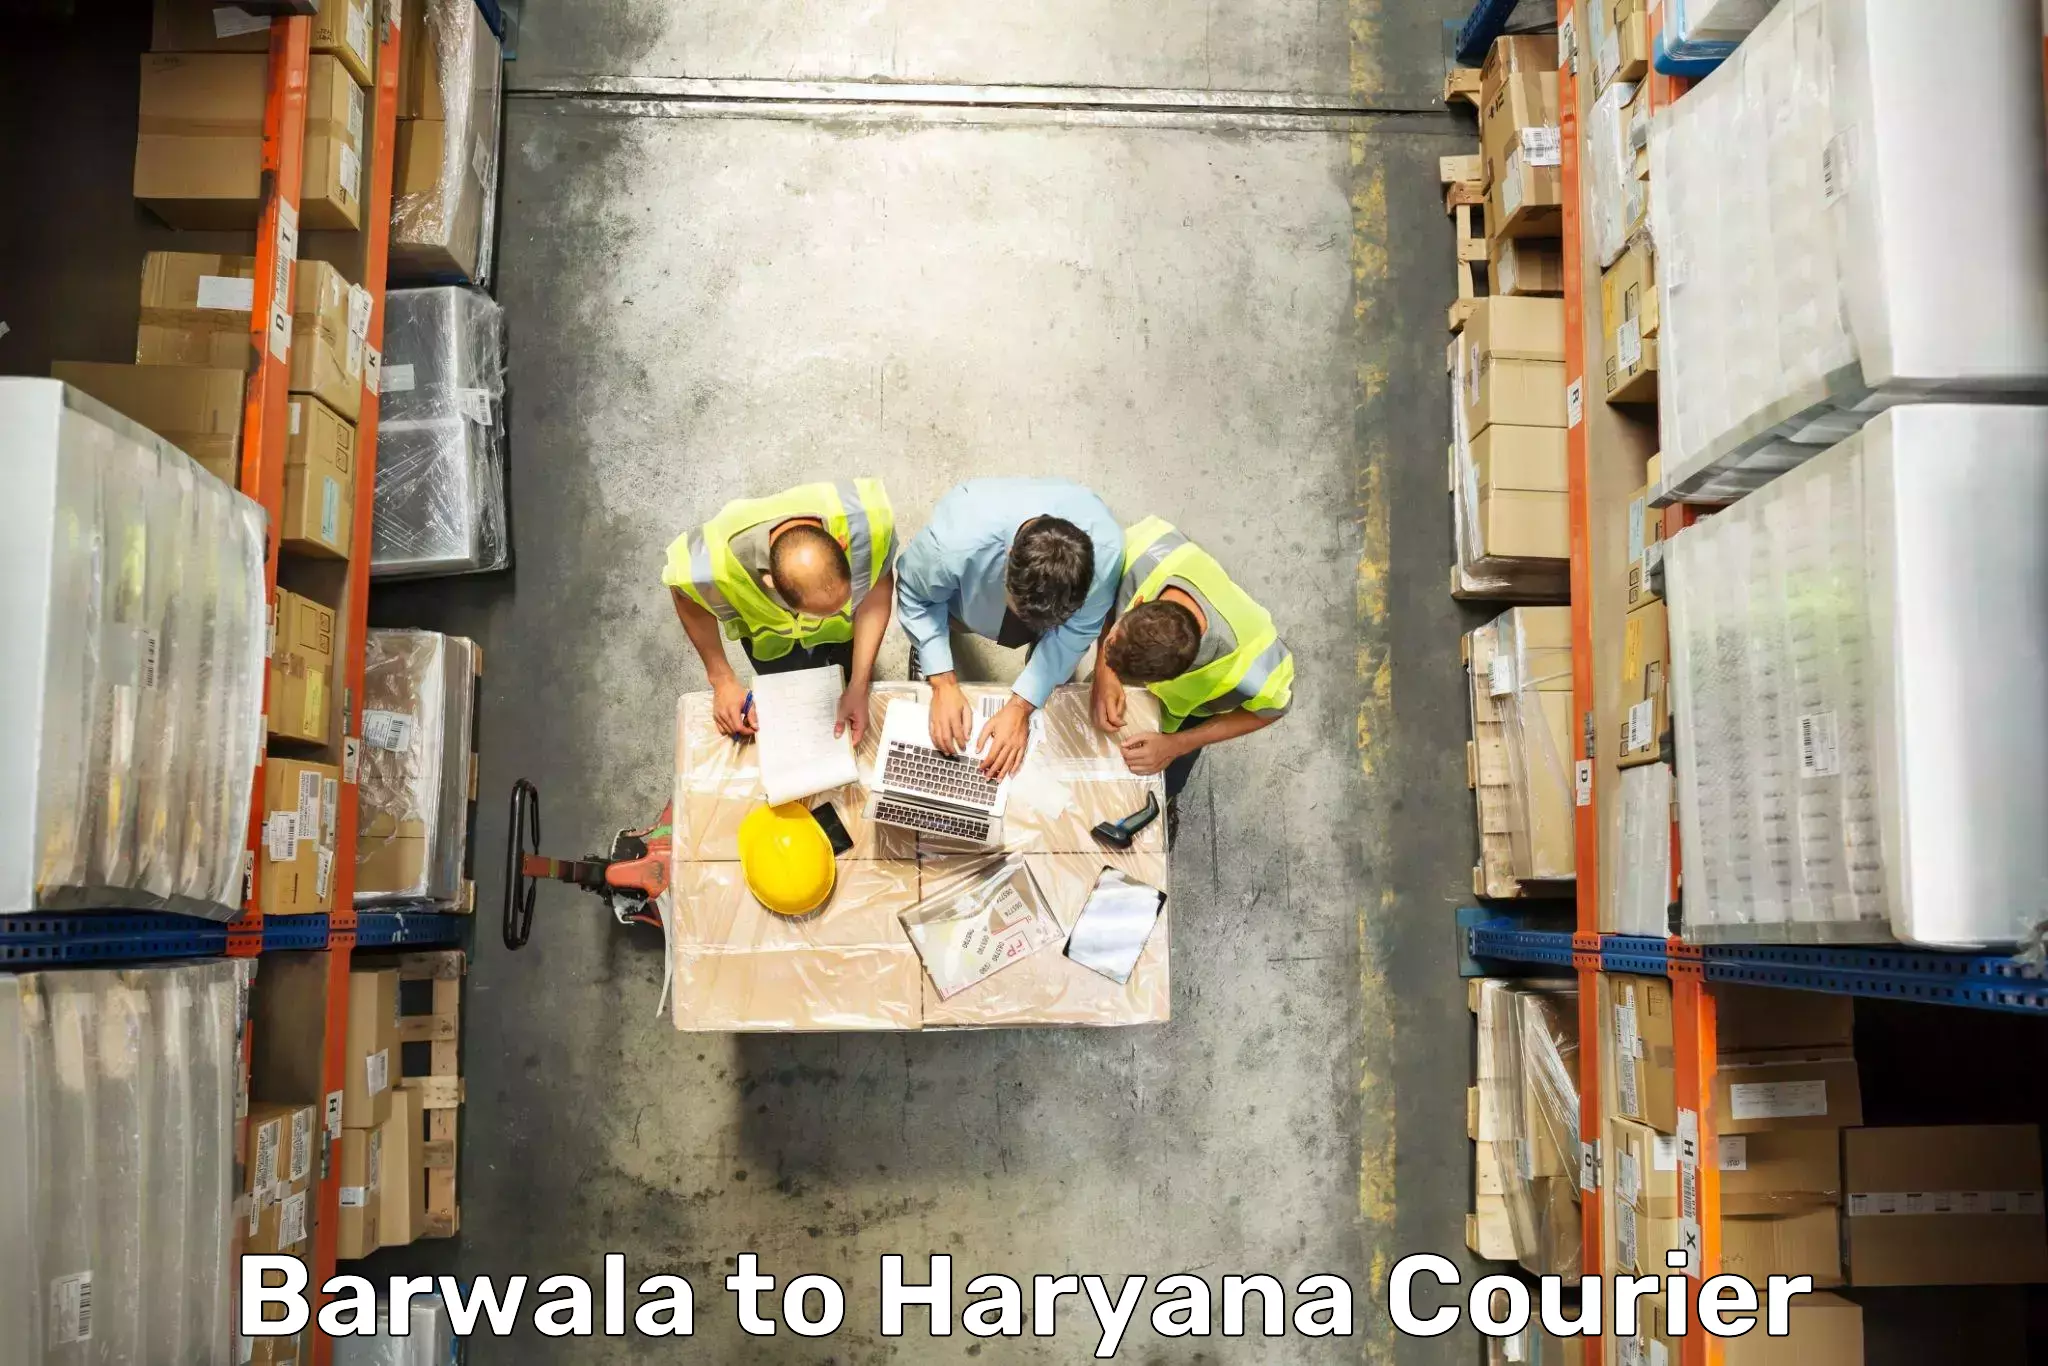 Luggage delivery network Barwala to Hansi